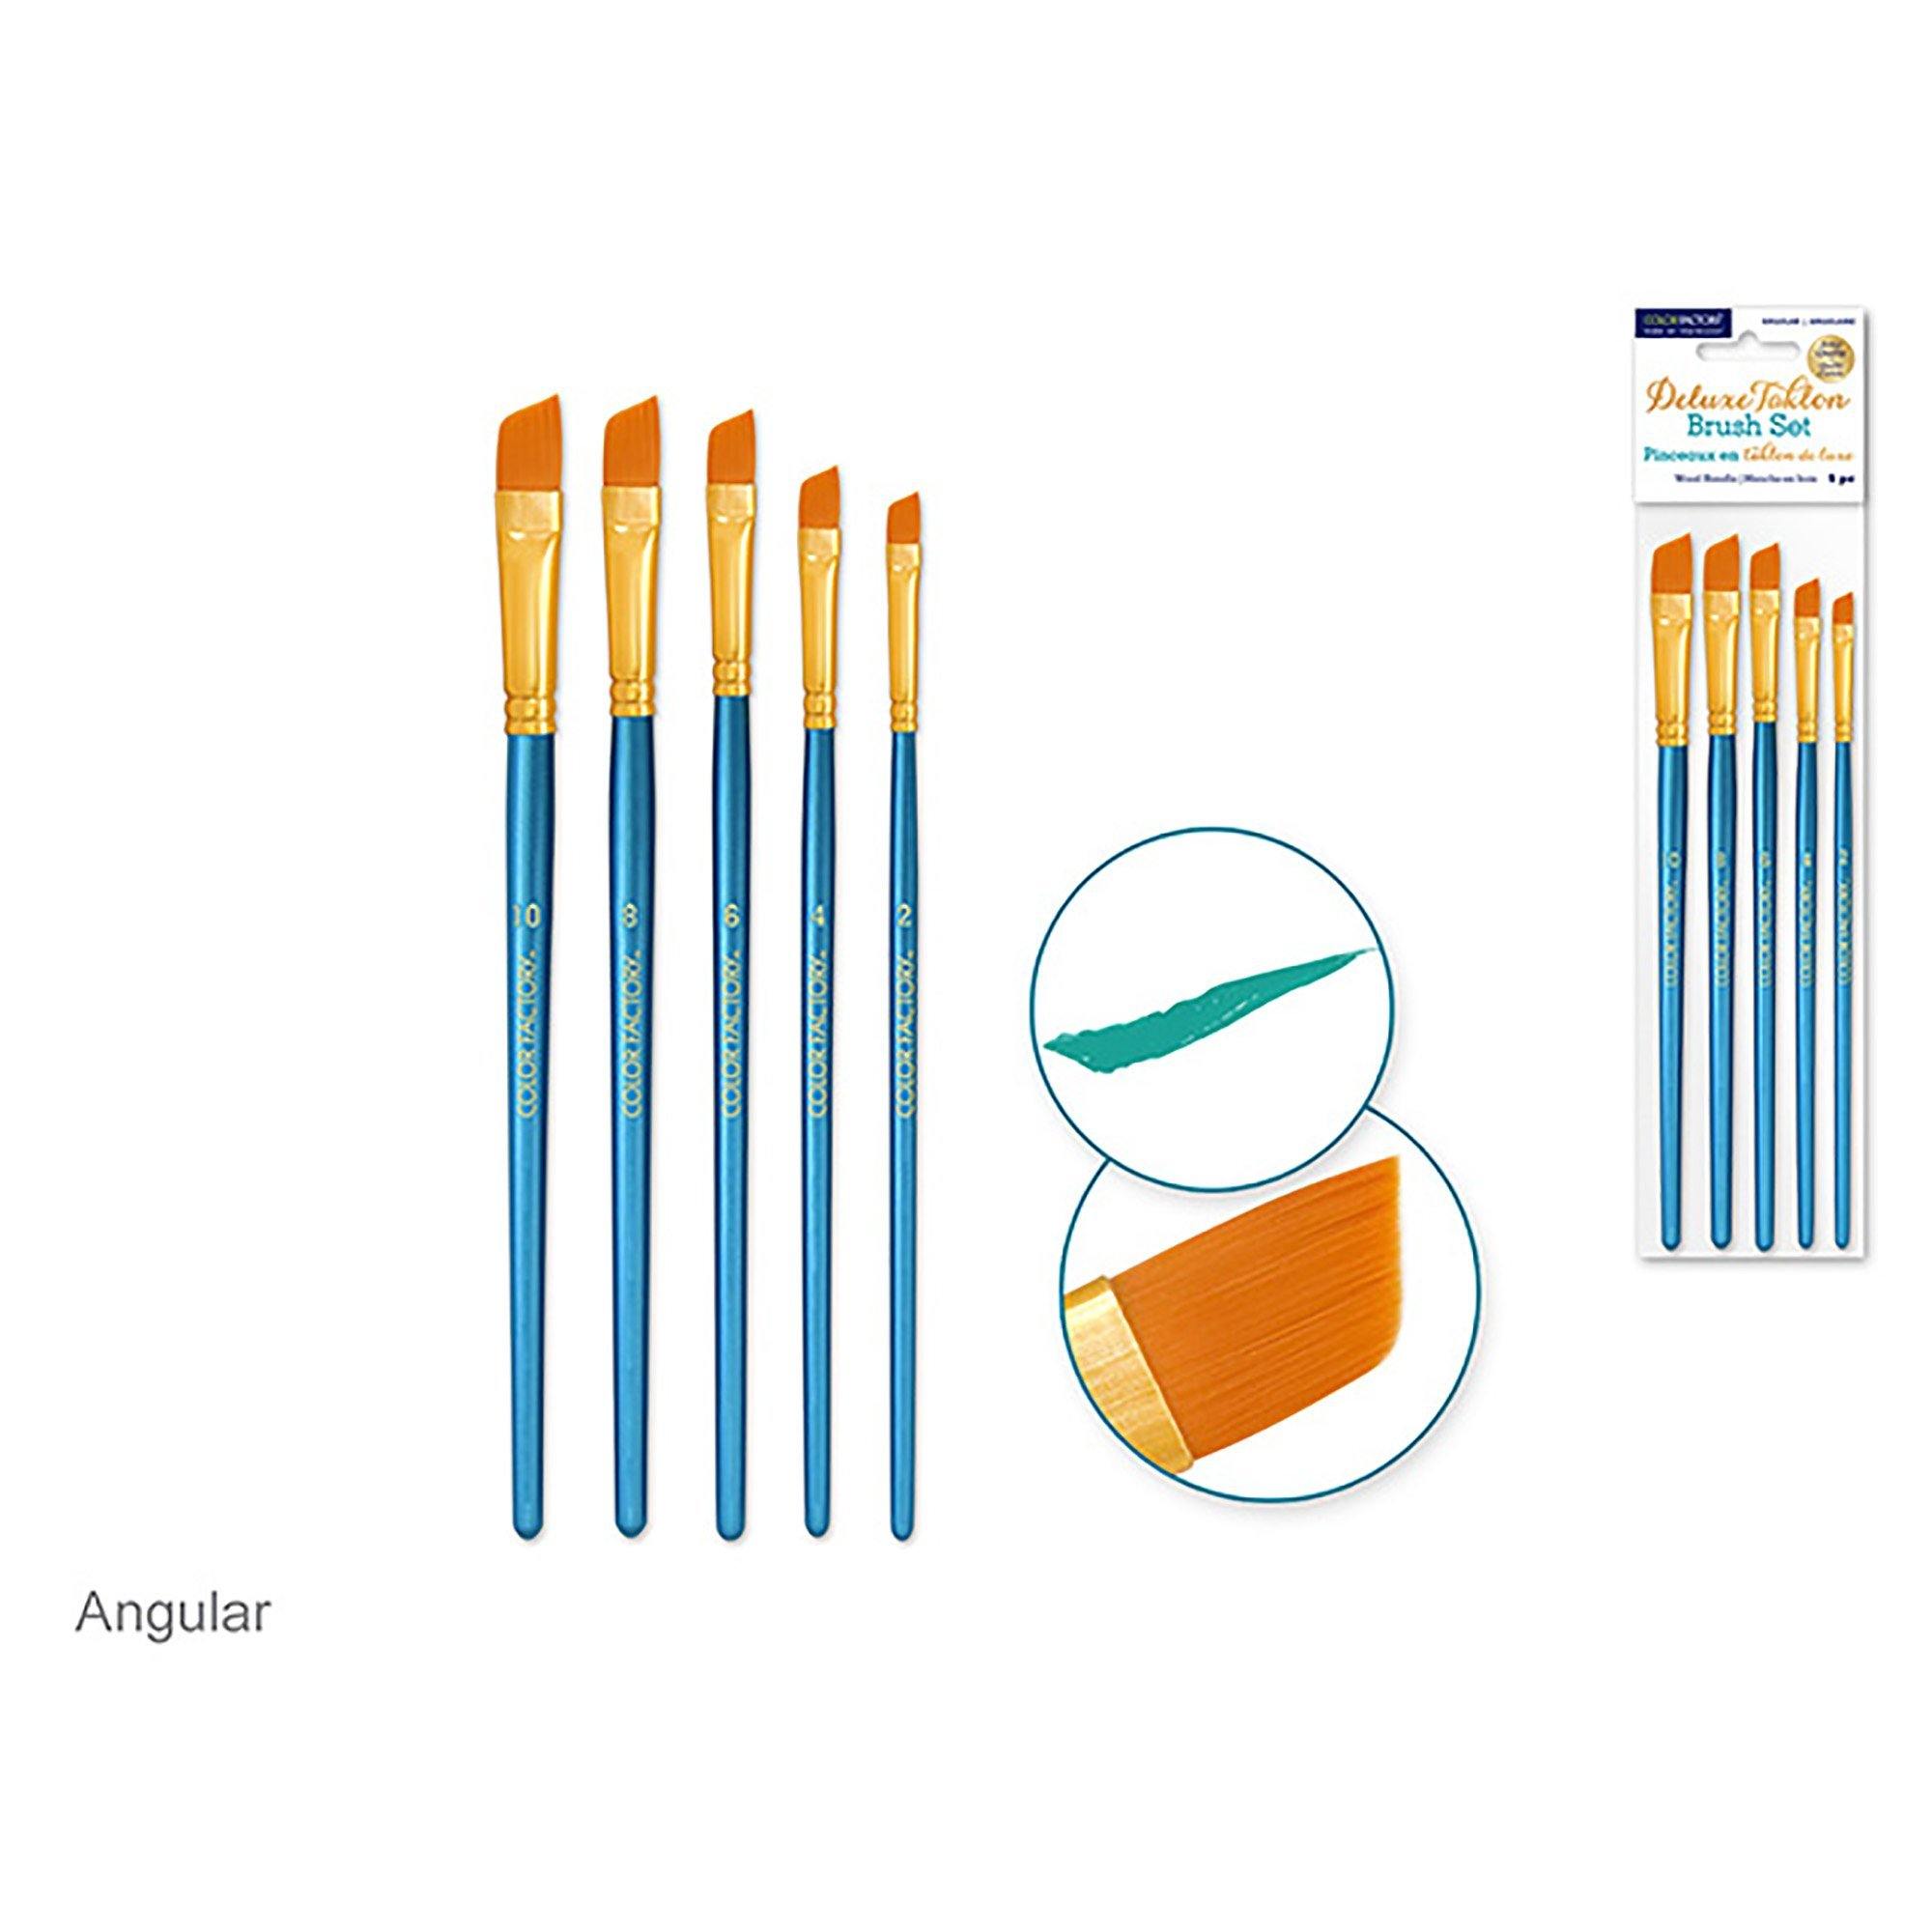 Angular Artist Brush Set: Canva Deluxe Taklon Brush Sets X5 Wood Handle - Dollar Max Dépôt